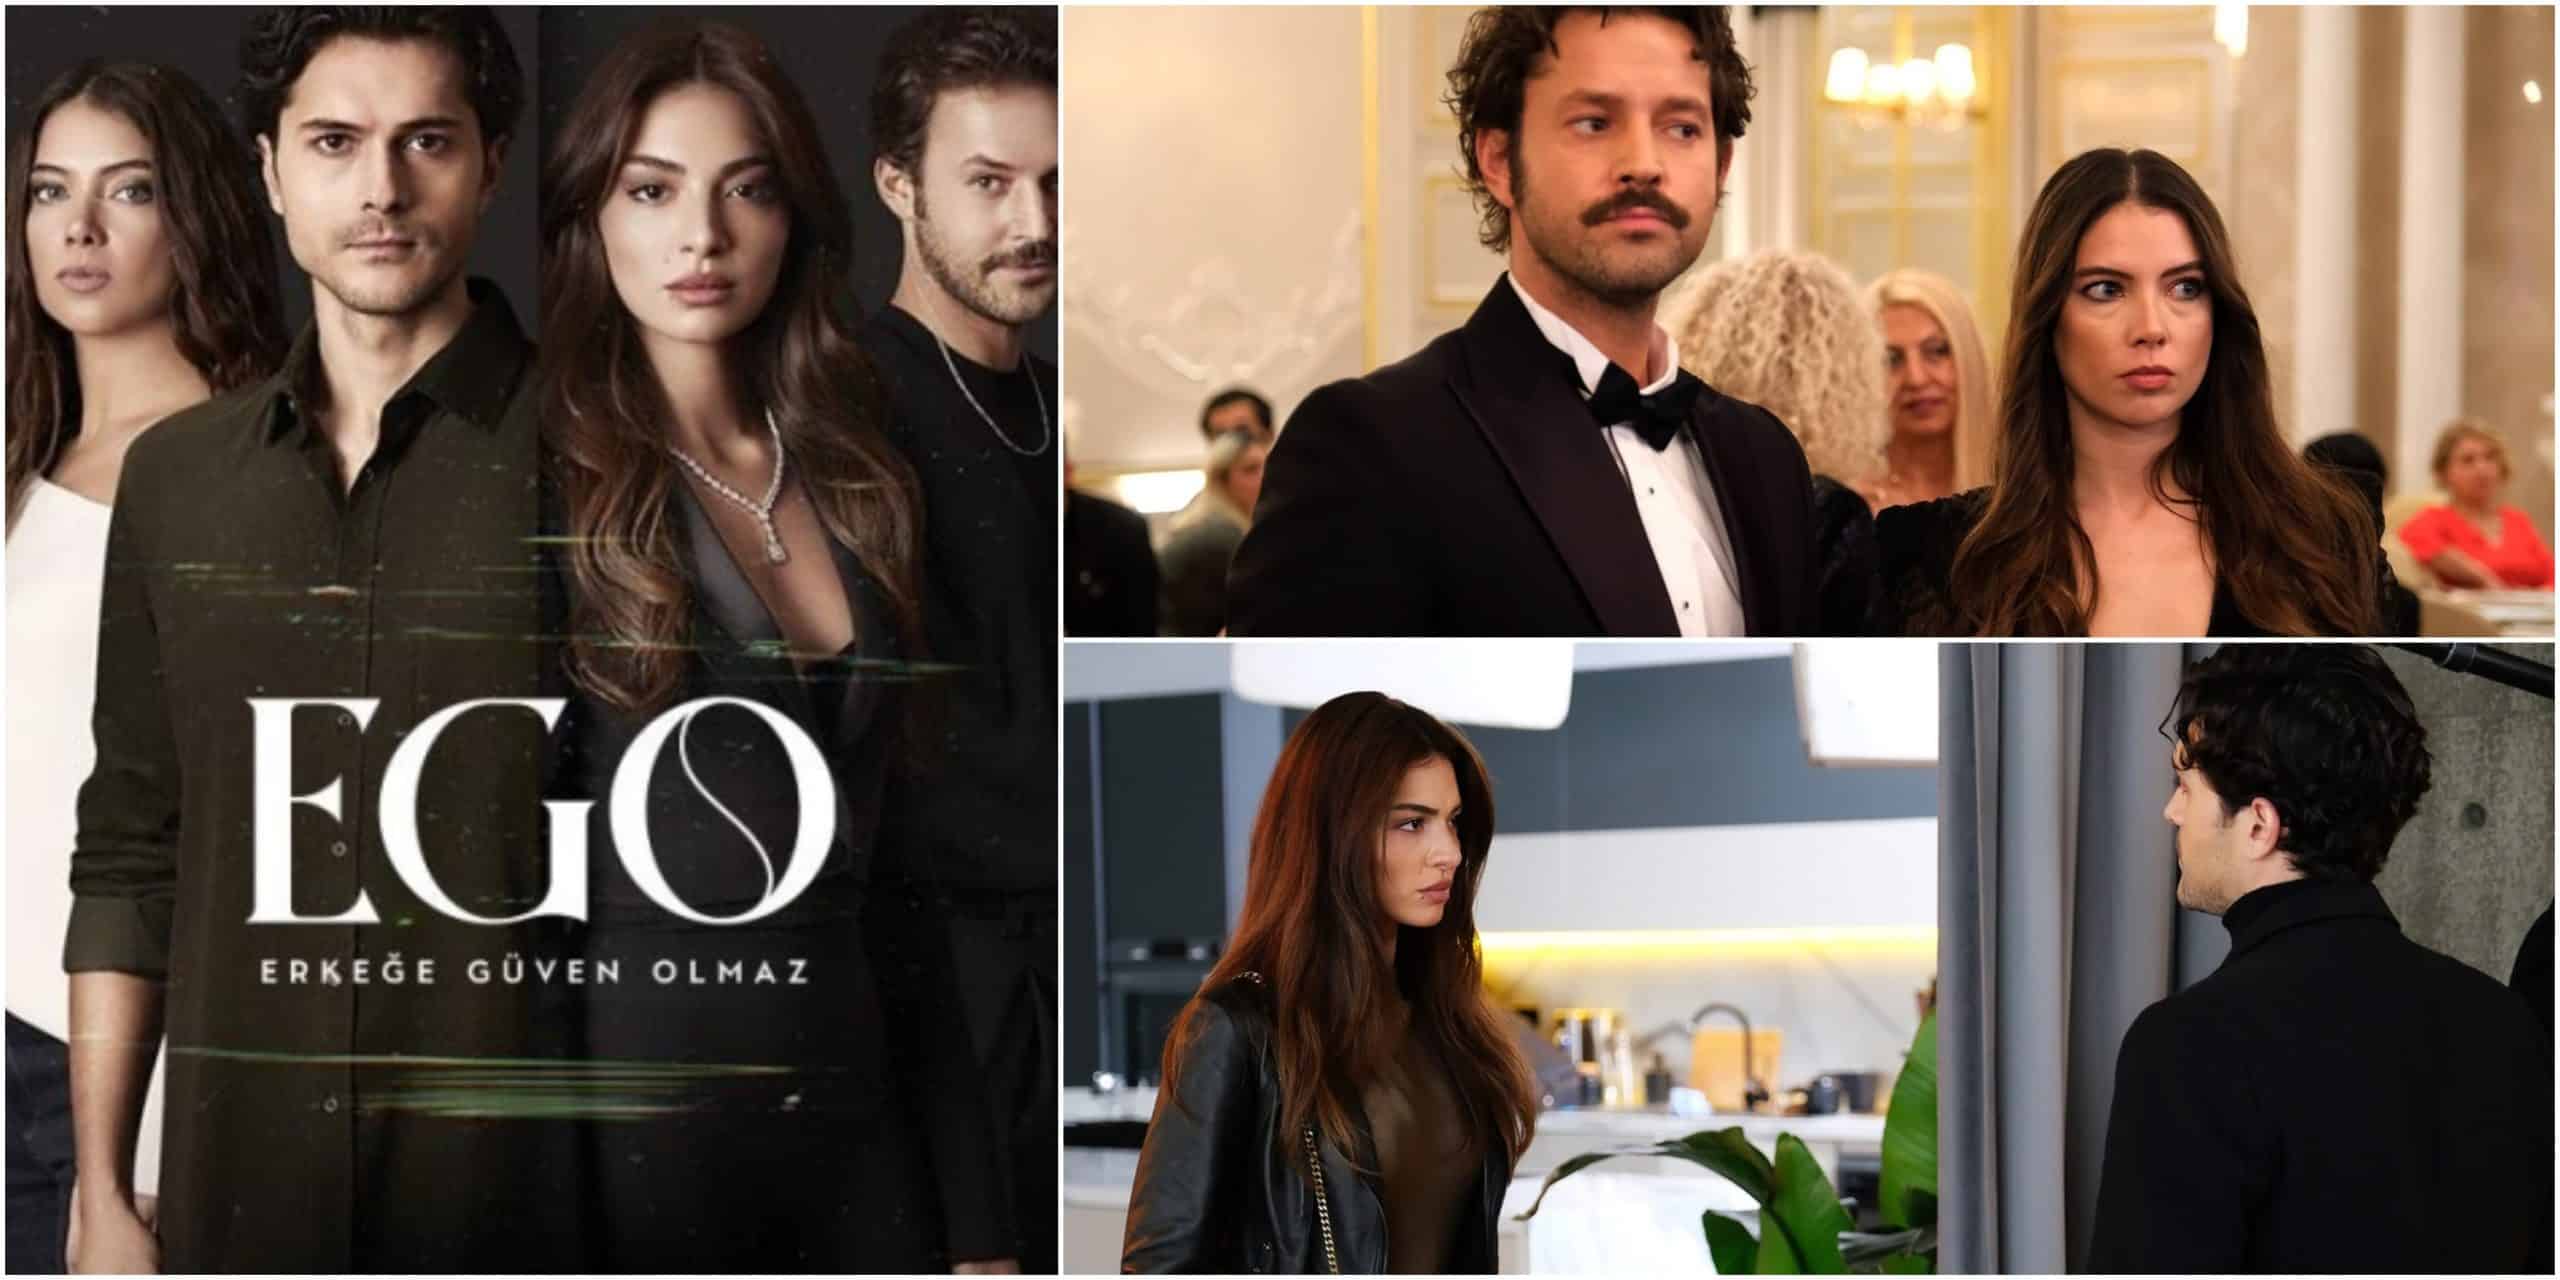 Erkeğe Güven Olmaz (EGO) Turkish Series Episode 8 Release Date